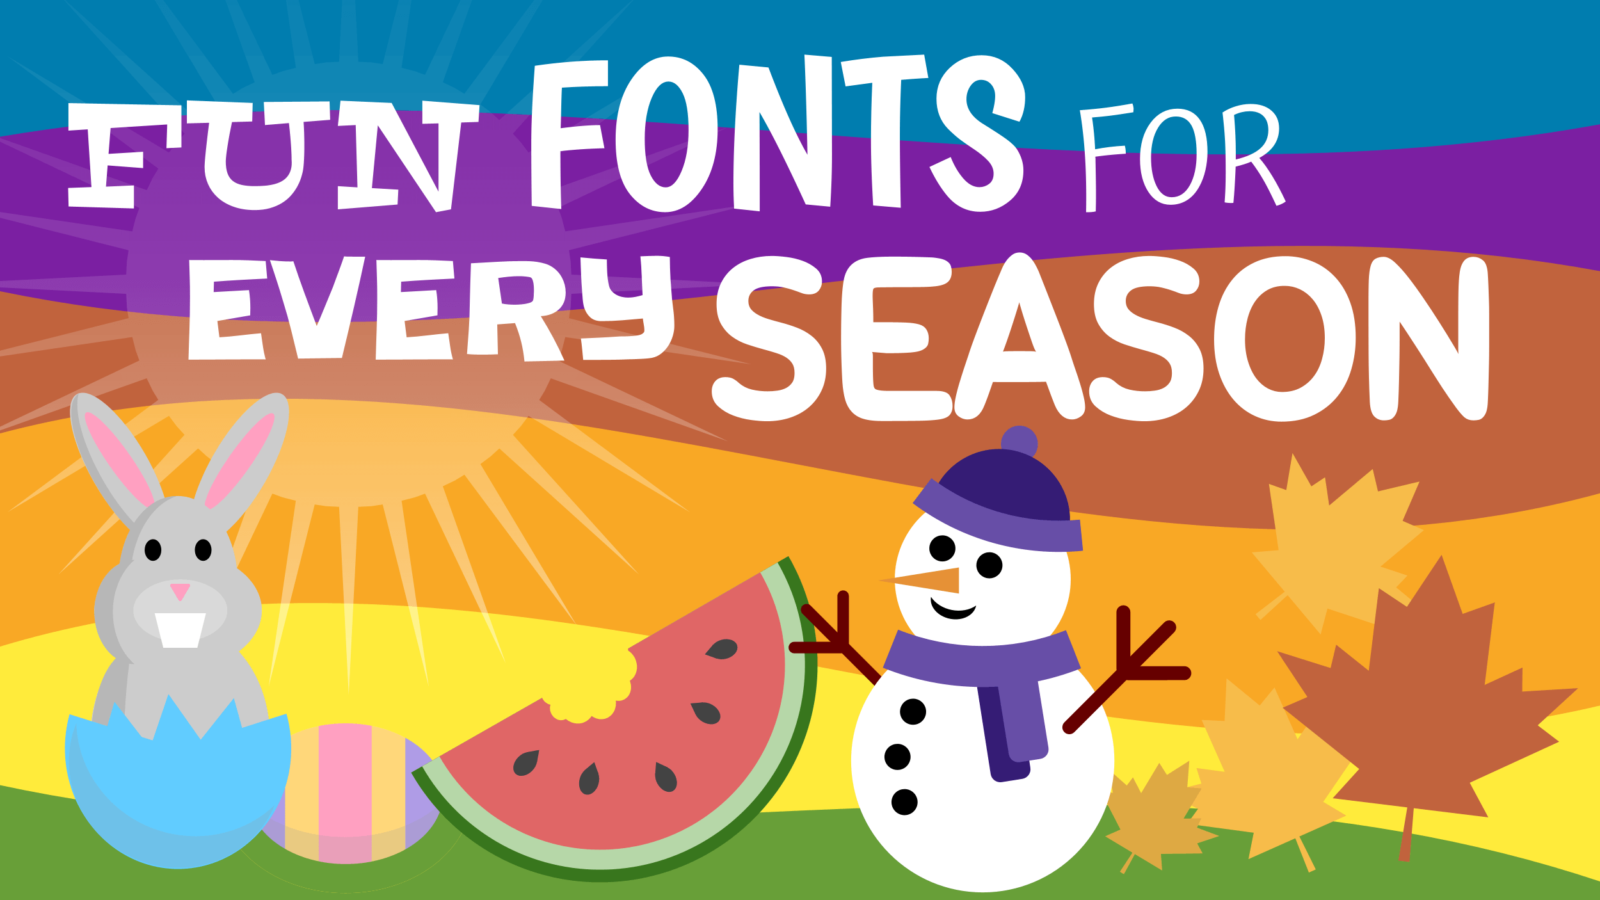 Fun Fonts for Every Season